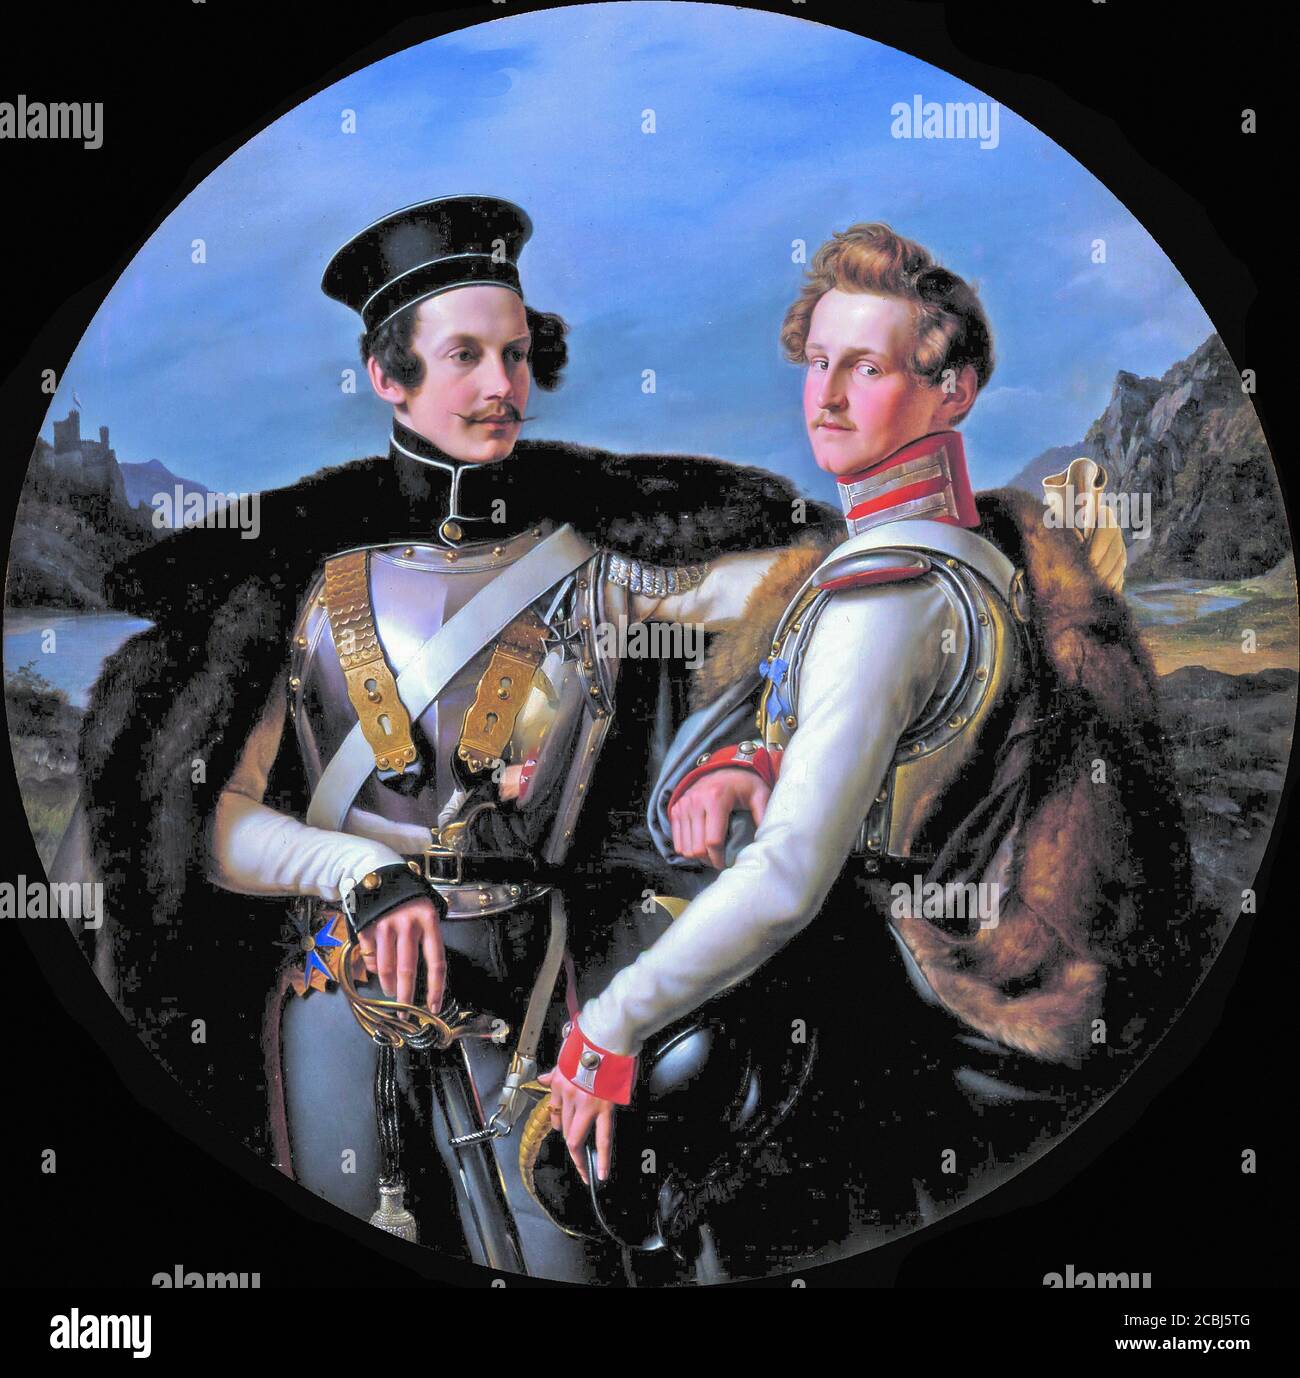 schadow, wilhelm von - doppio Ritratto dei principi Friedrich Wilhelm di Prussia e Wilhelm zu Solms-Braunfels in una divisa di Cuirassier - 29850689743 e7677053e5 o Foto Stock